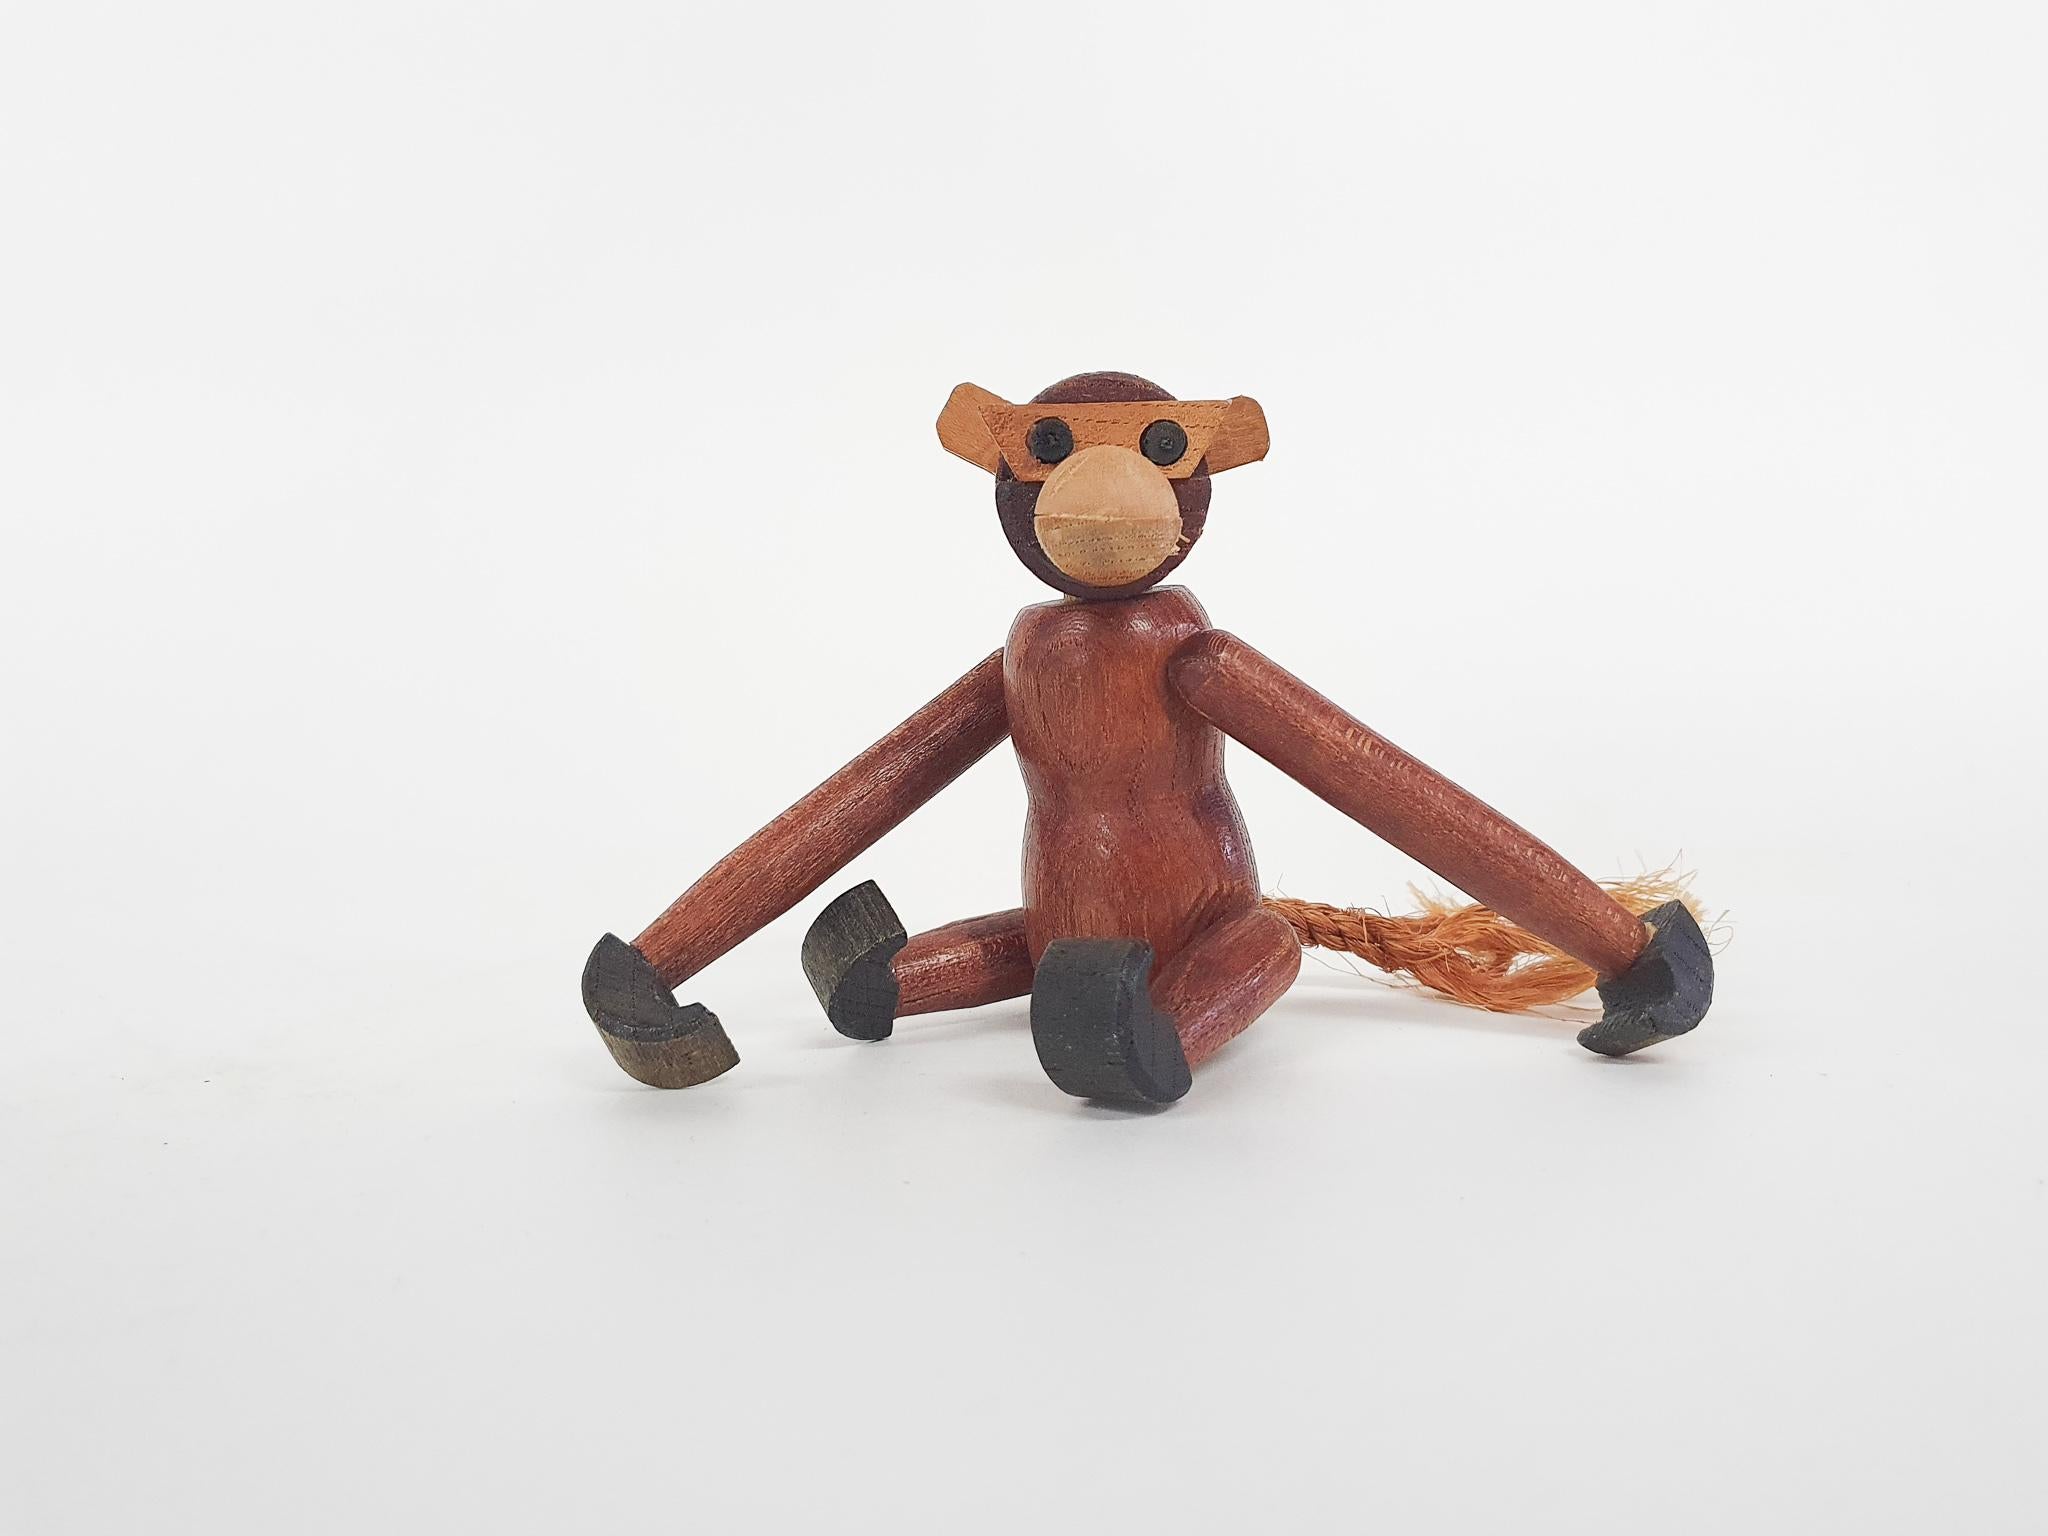 Teak Vintage Wooden Toy Monkey in the Style of Kay Bojesen, Denmark, 1960's